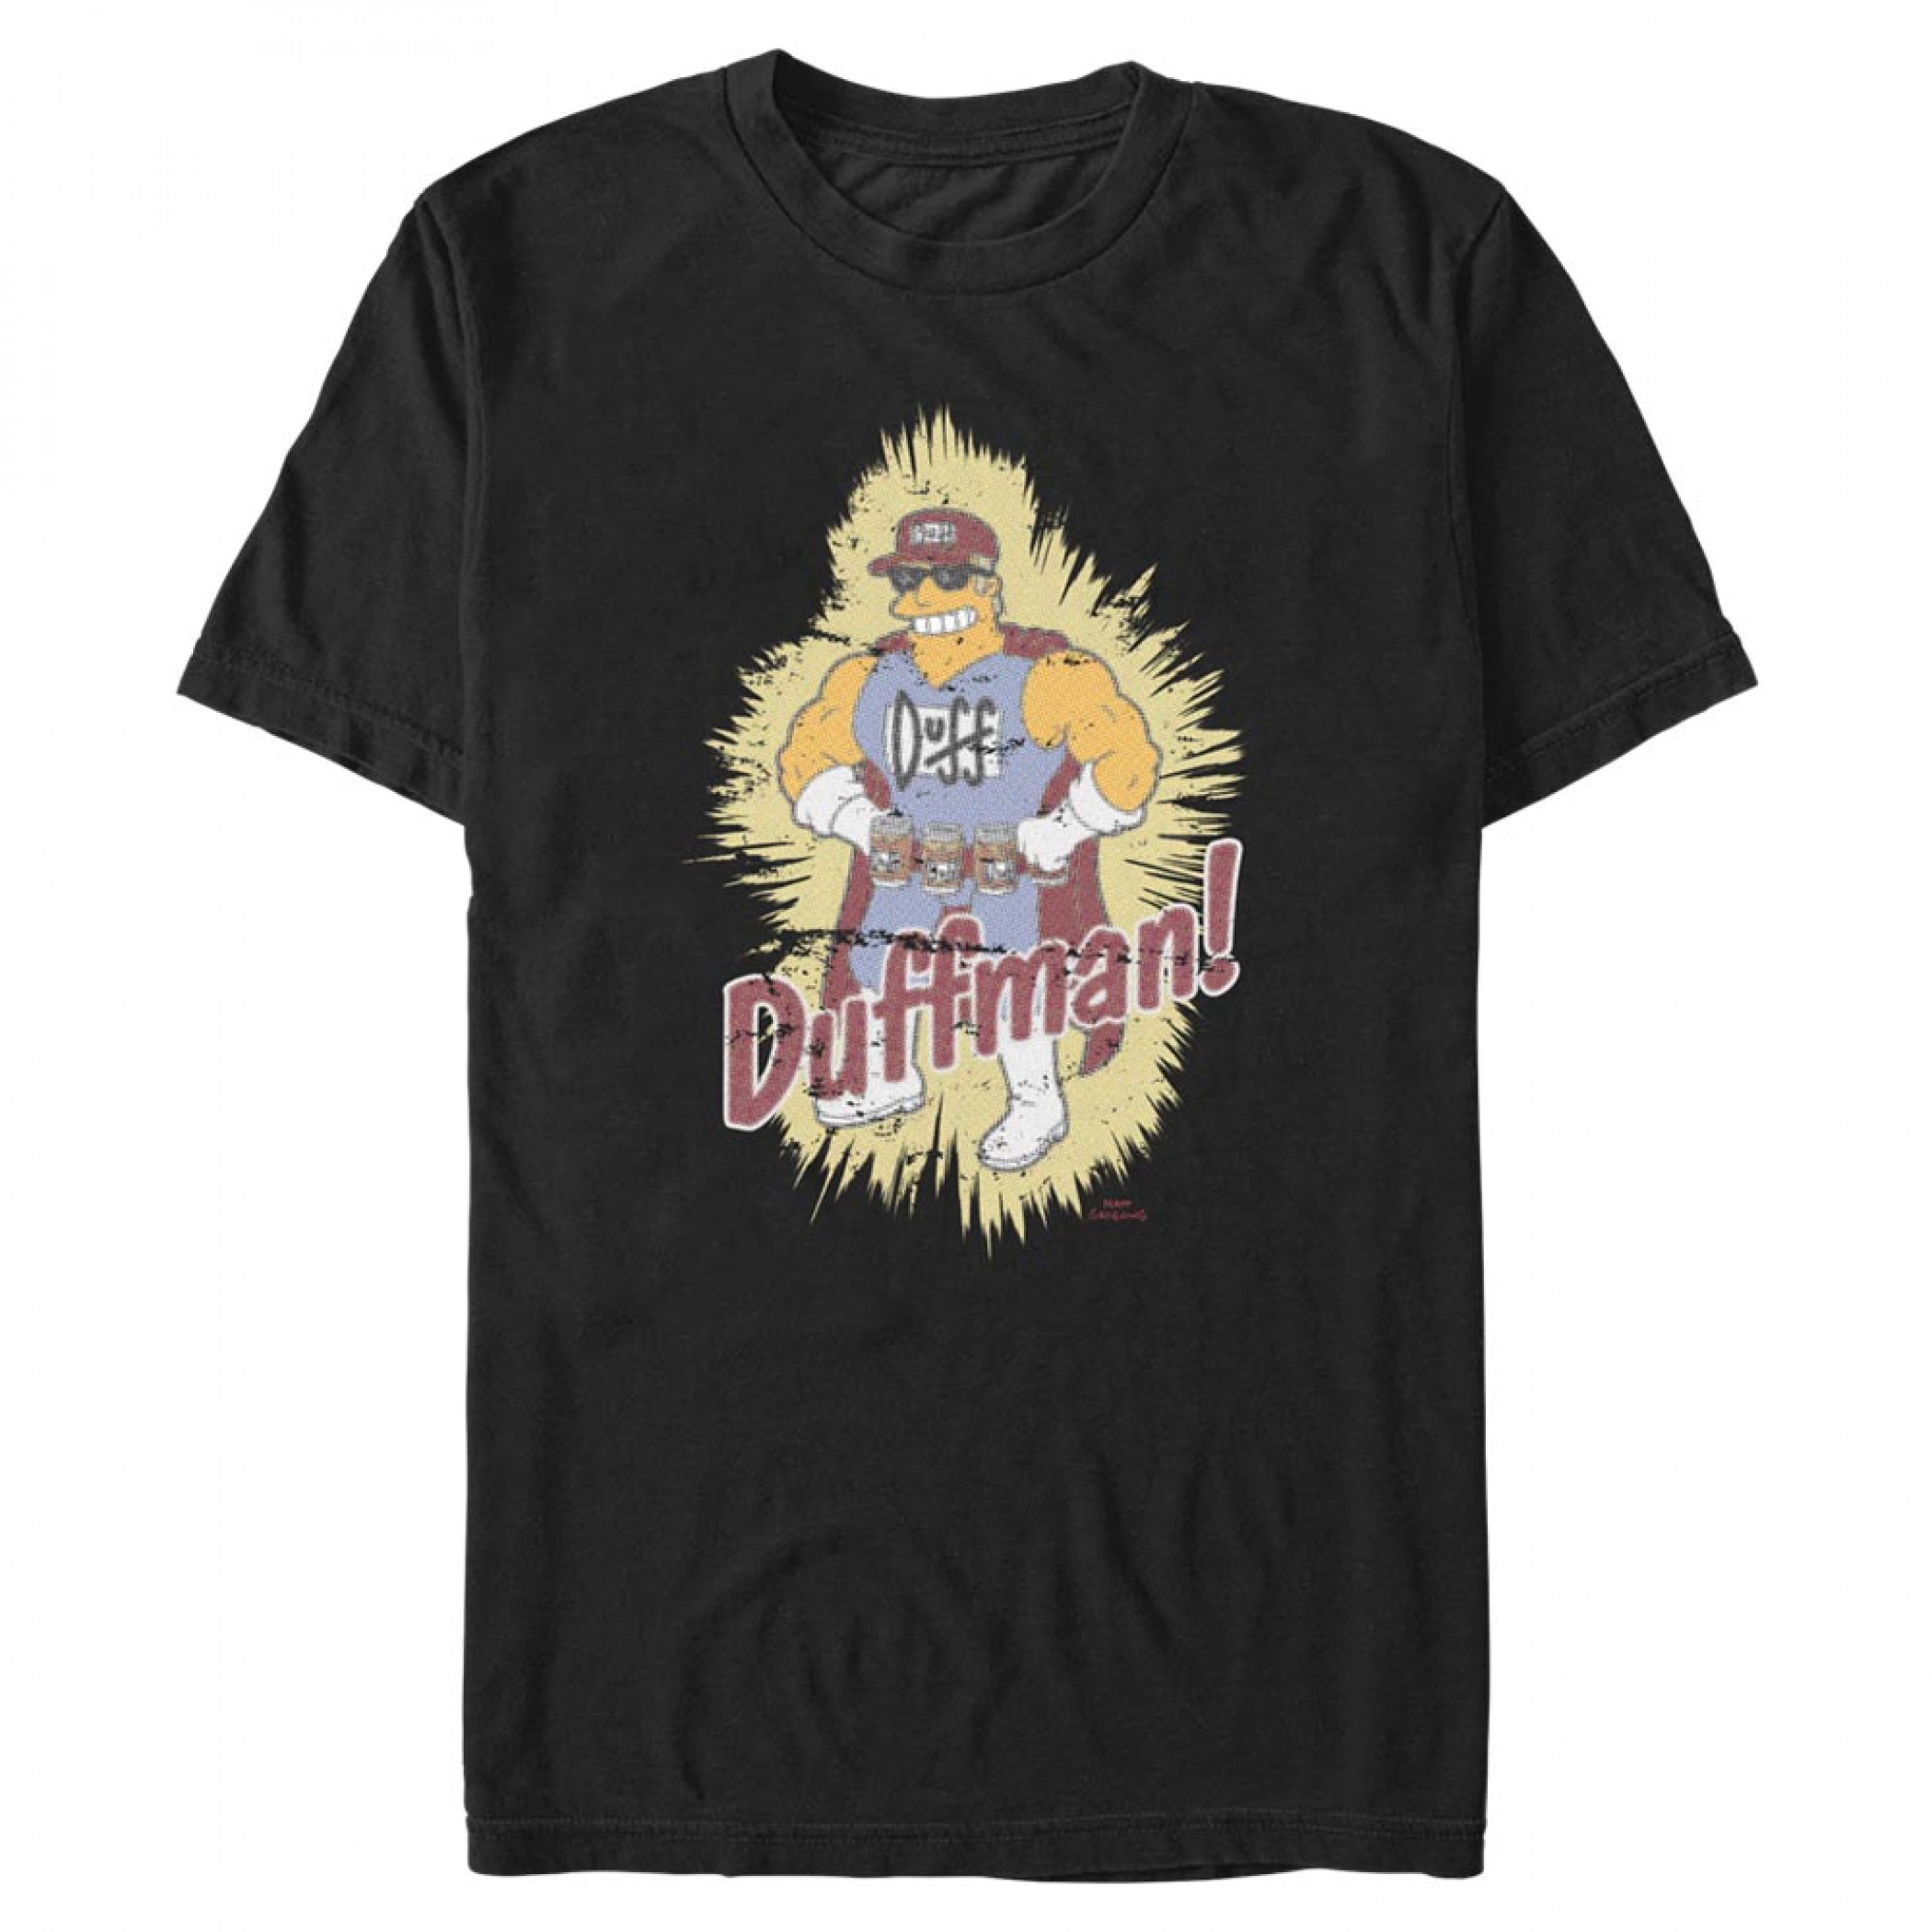 The Simpsons Duffman! T-Shirt